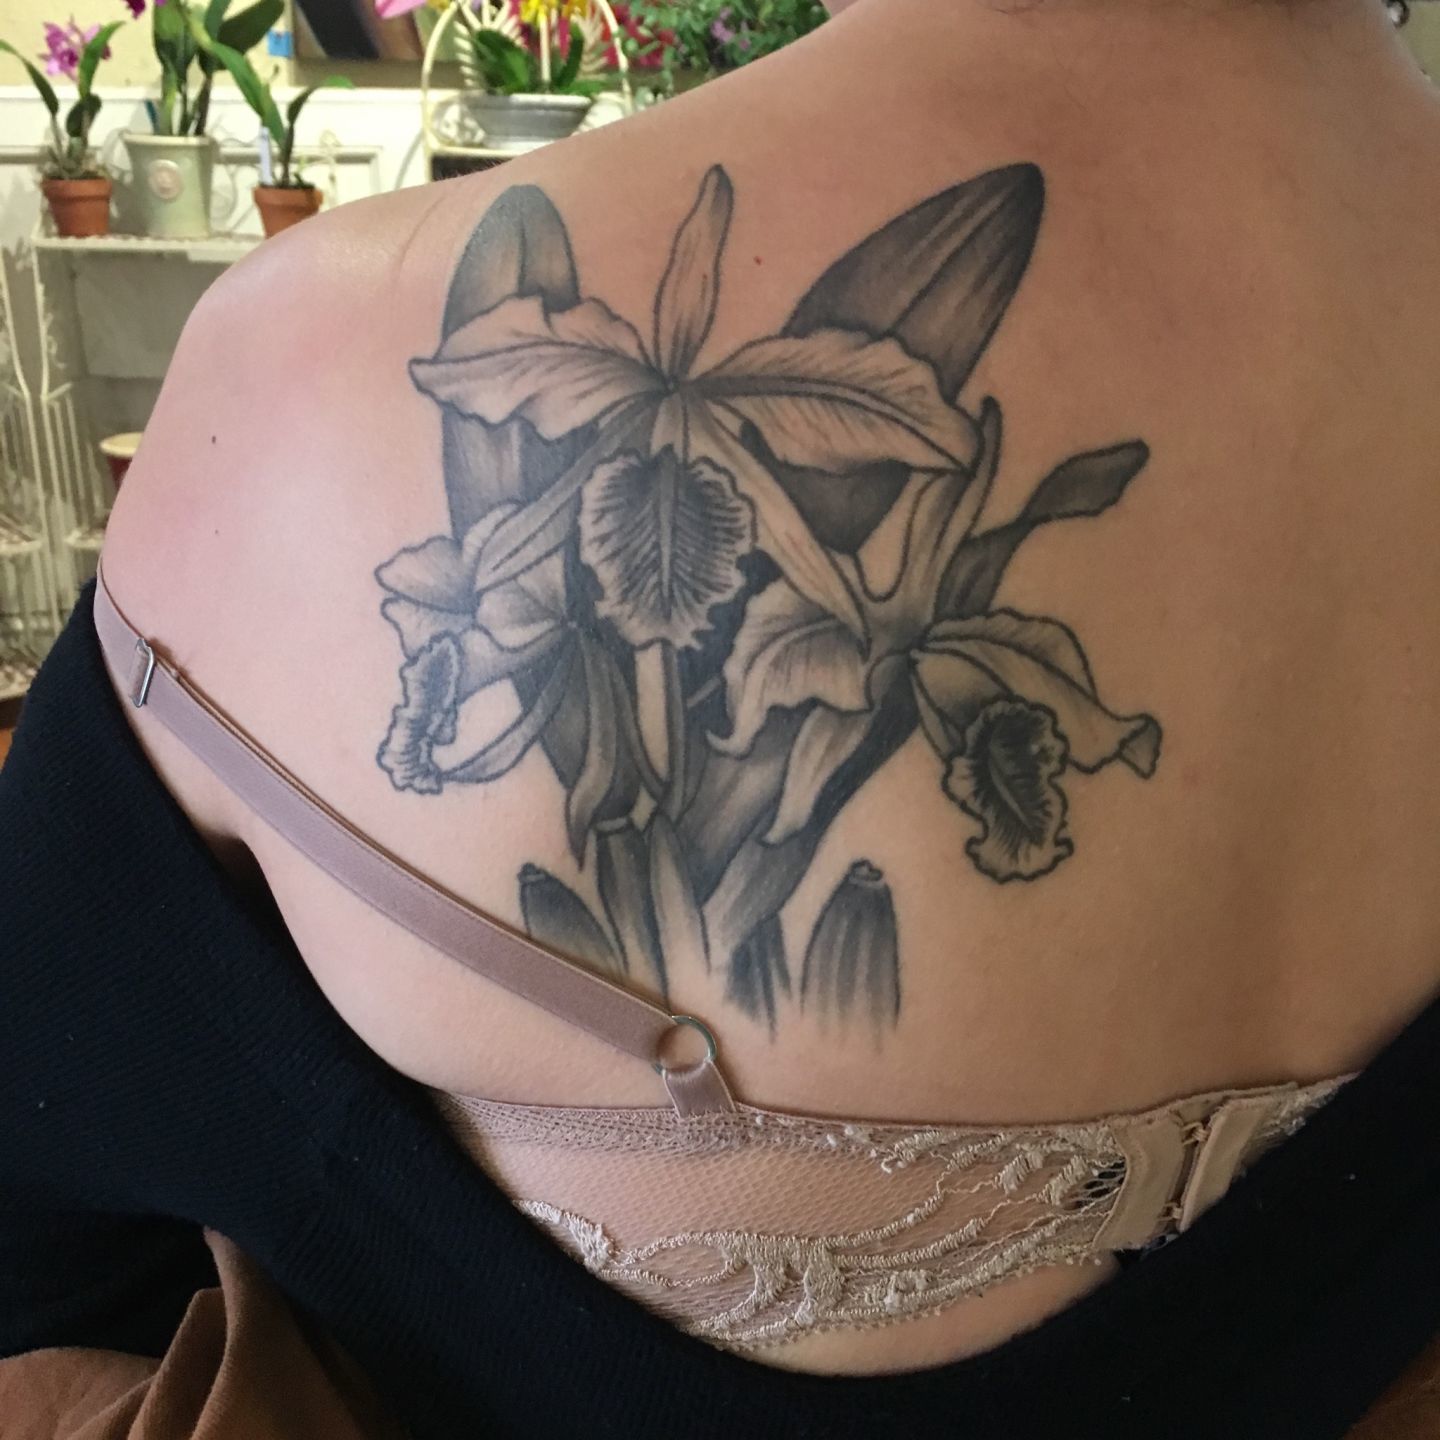 Plague doctor by Meli, Black Orchid Tattoo Studio, ZG, Croatia : r/tattoos